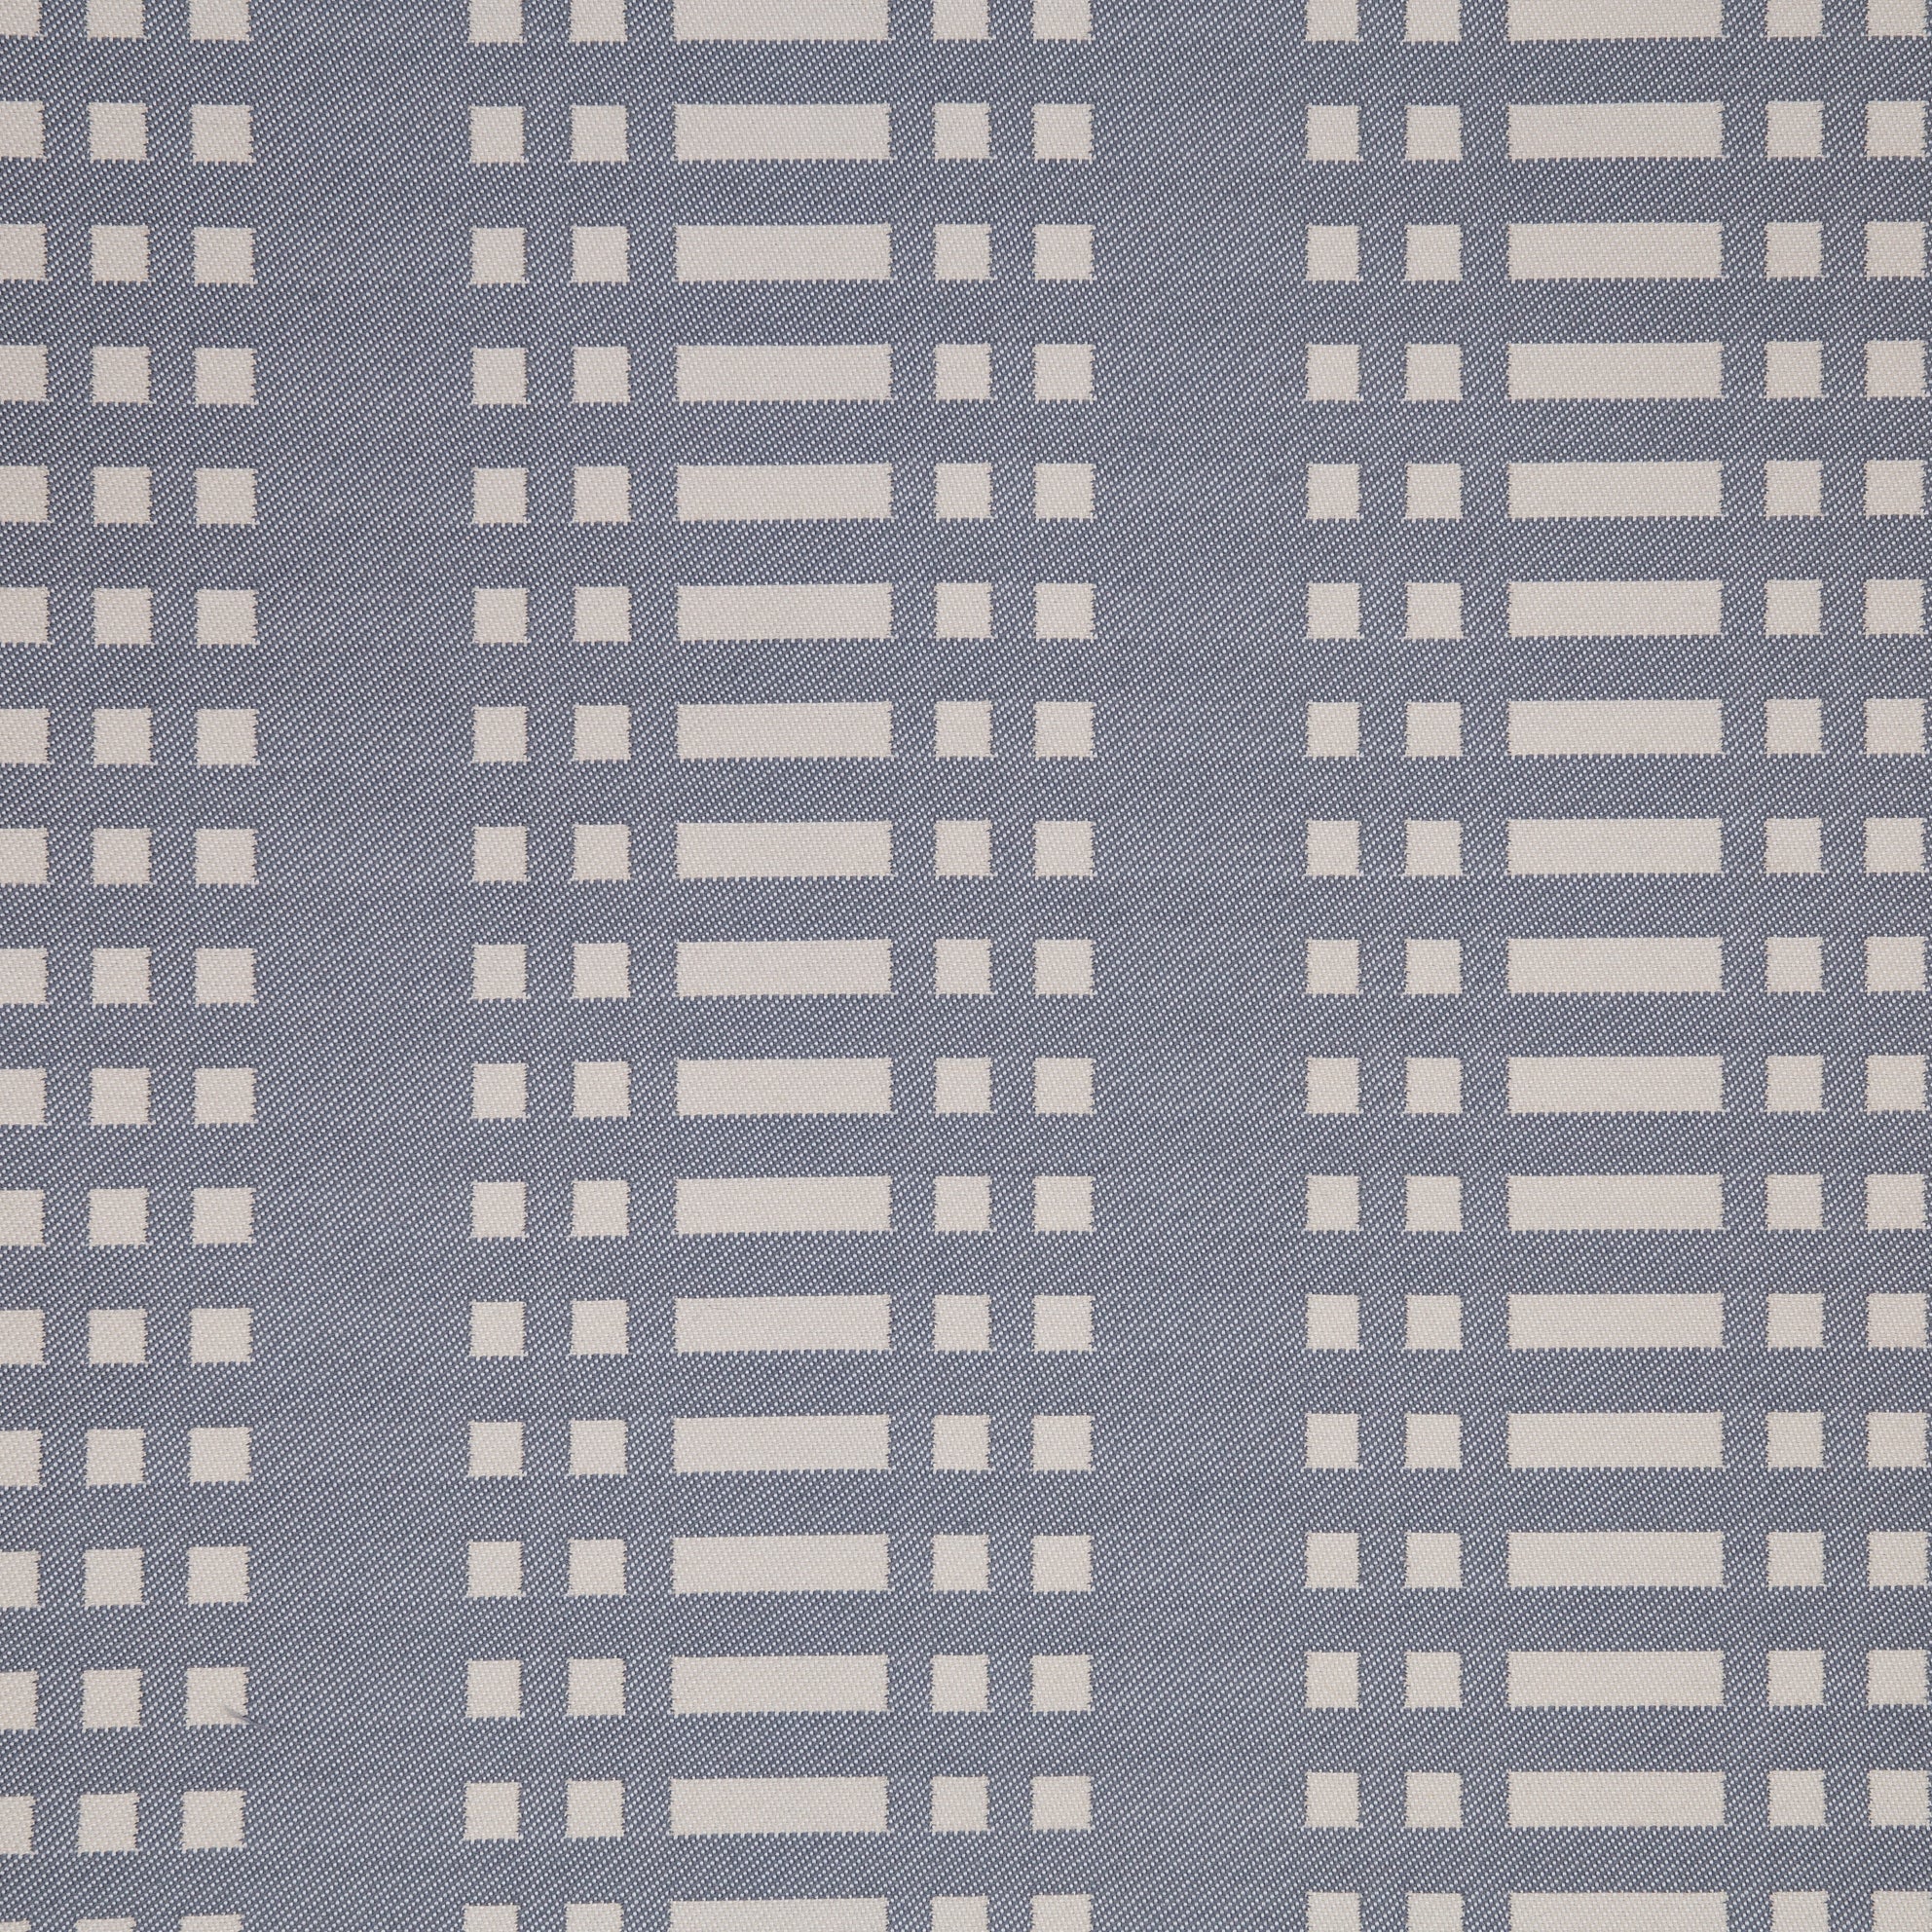 Nereus Contract Furnishing Fabric - Steel | Nicholas Engert Interiors